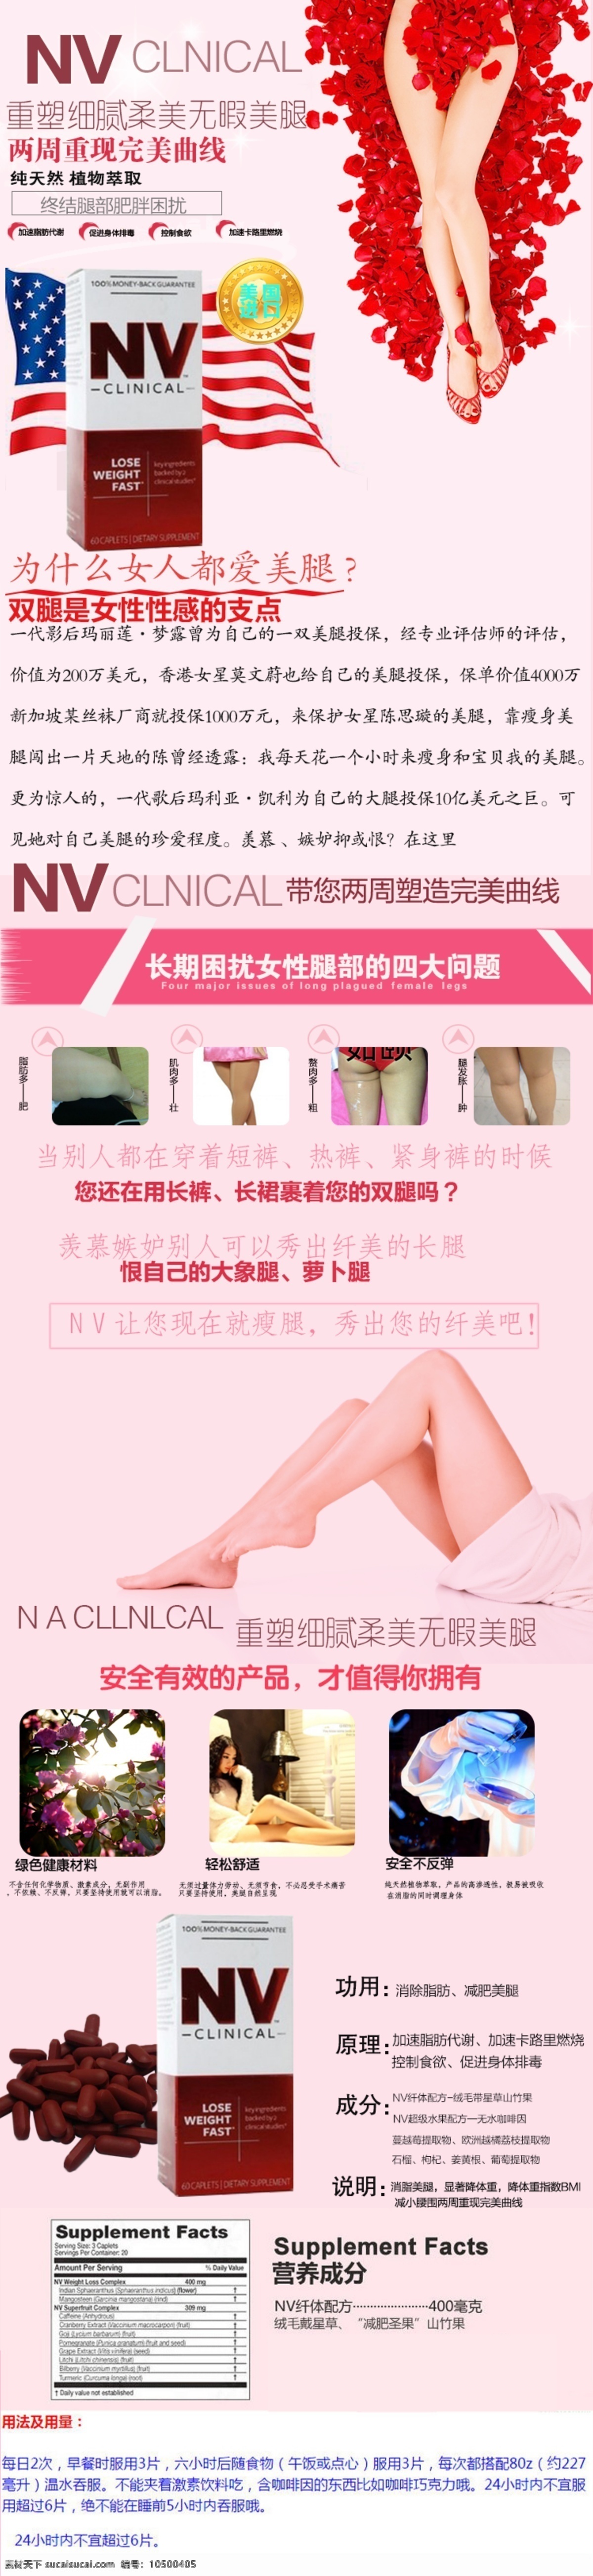 nv 减肥药 美腿 女性 原创设计 原创网页设计